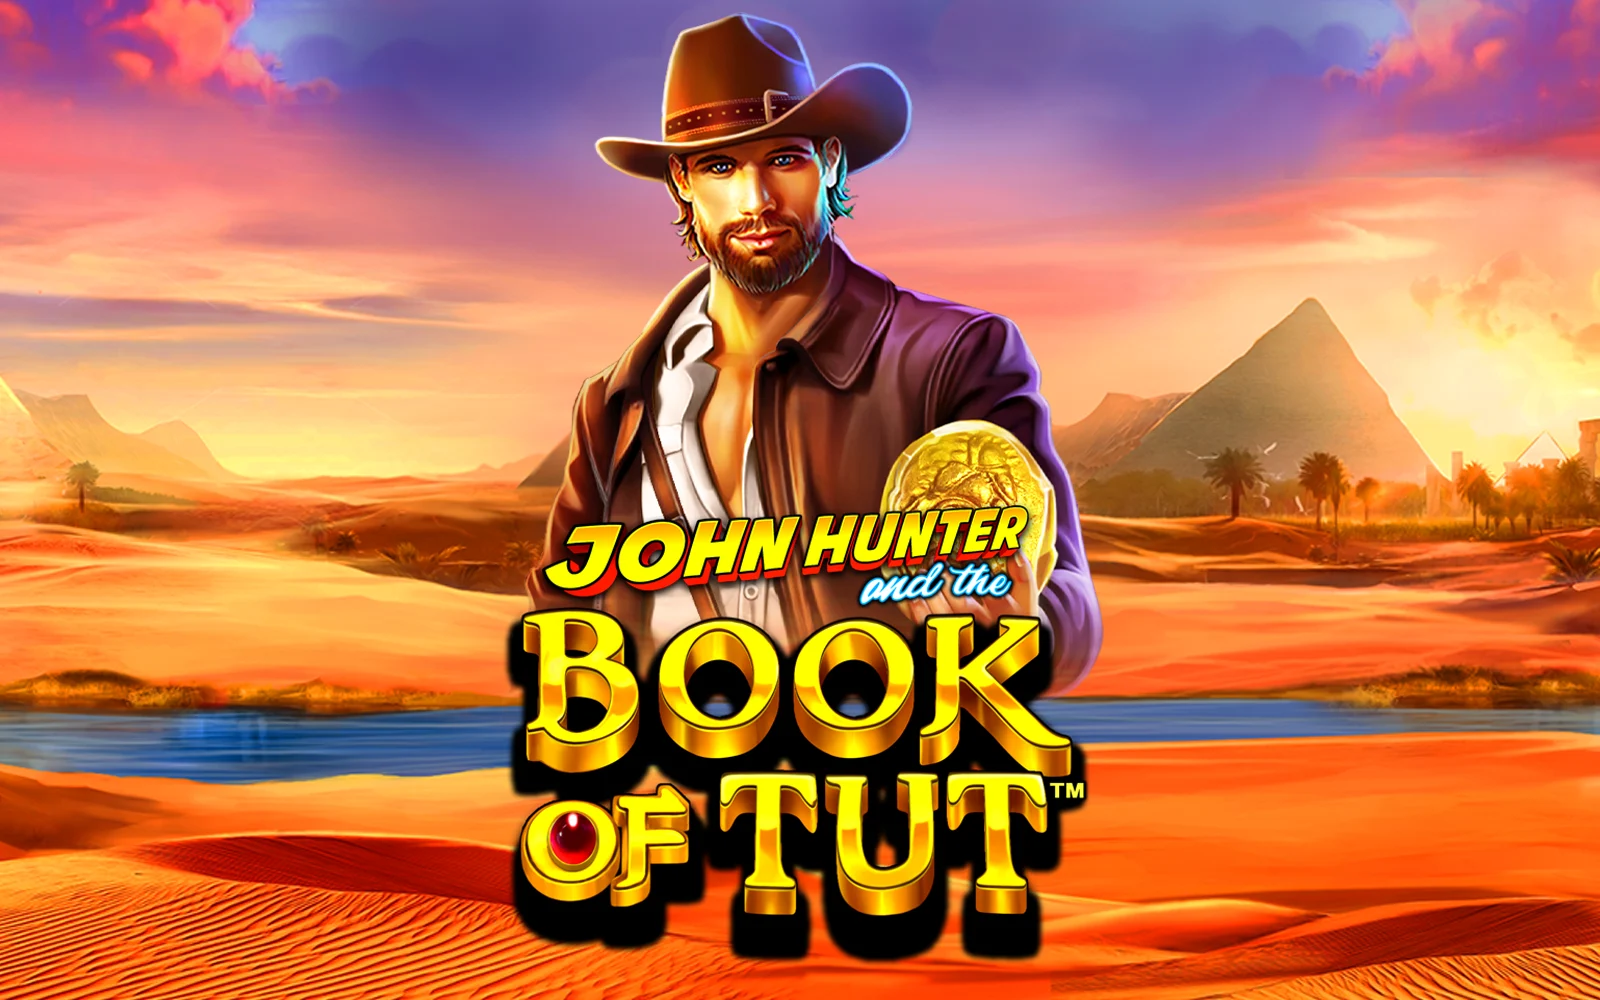 Speel John Hunter and the Book of Tut™ op Starcasino.be online casino